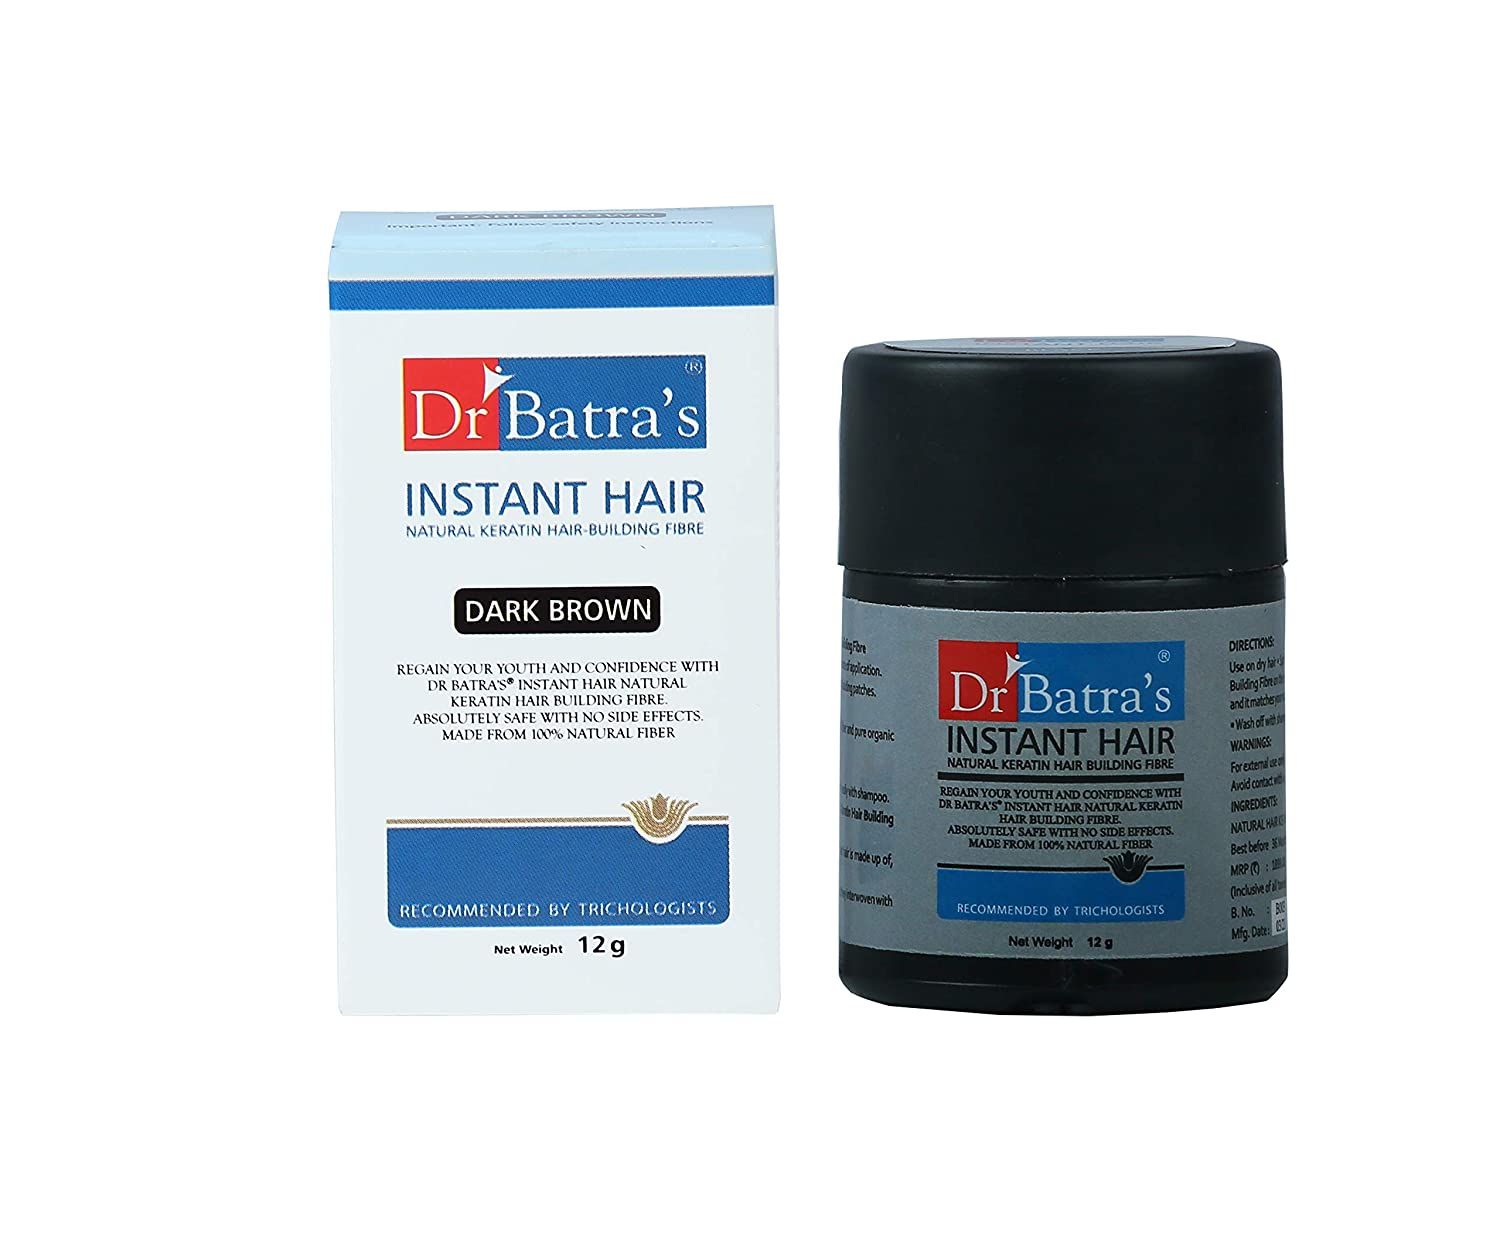 Dr Batra's Instant Hair Natural Keratin Hair Building Fibre